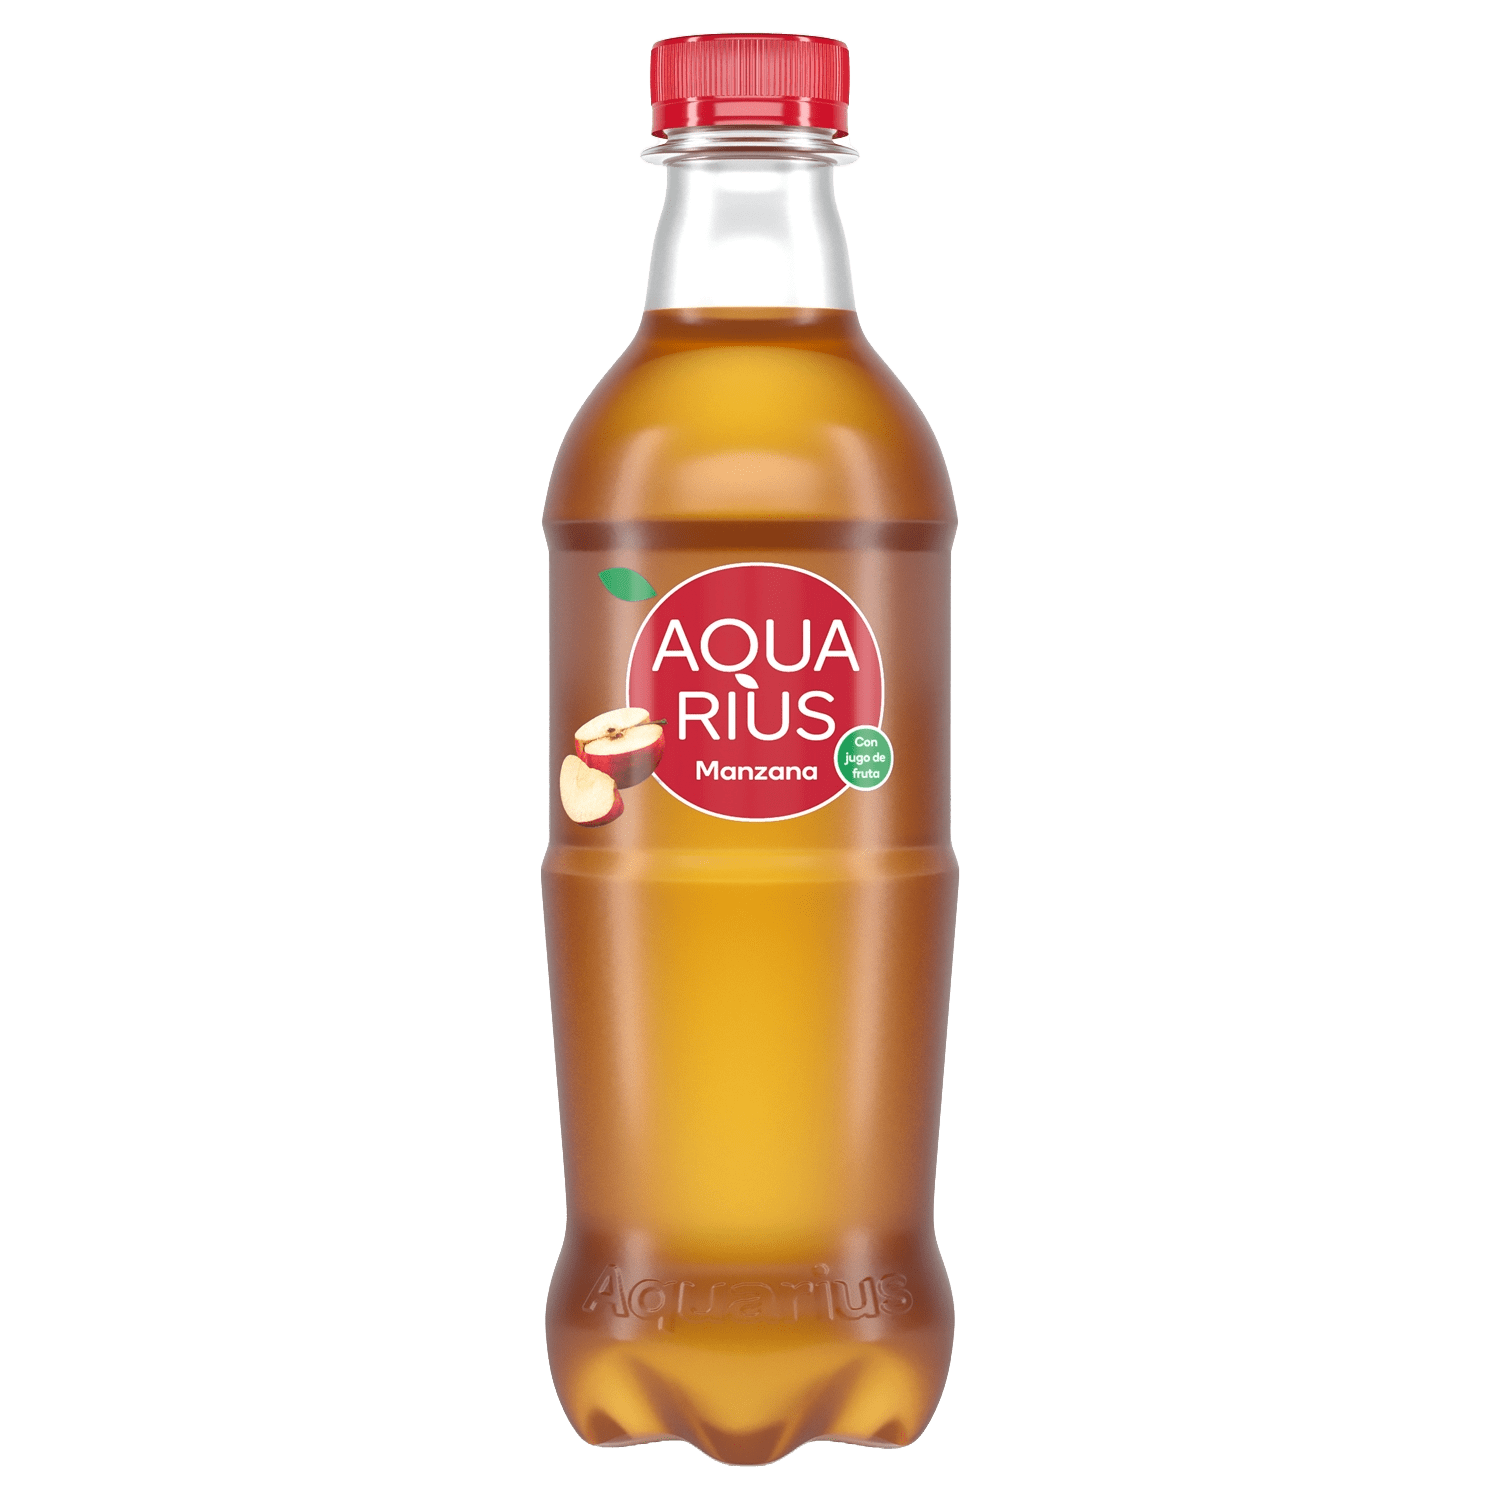 Botella de Aquarius Manzana